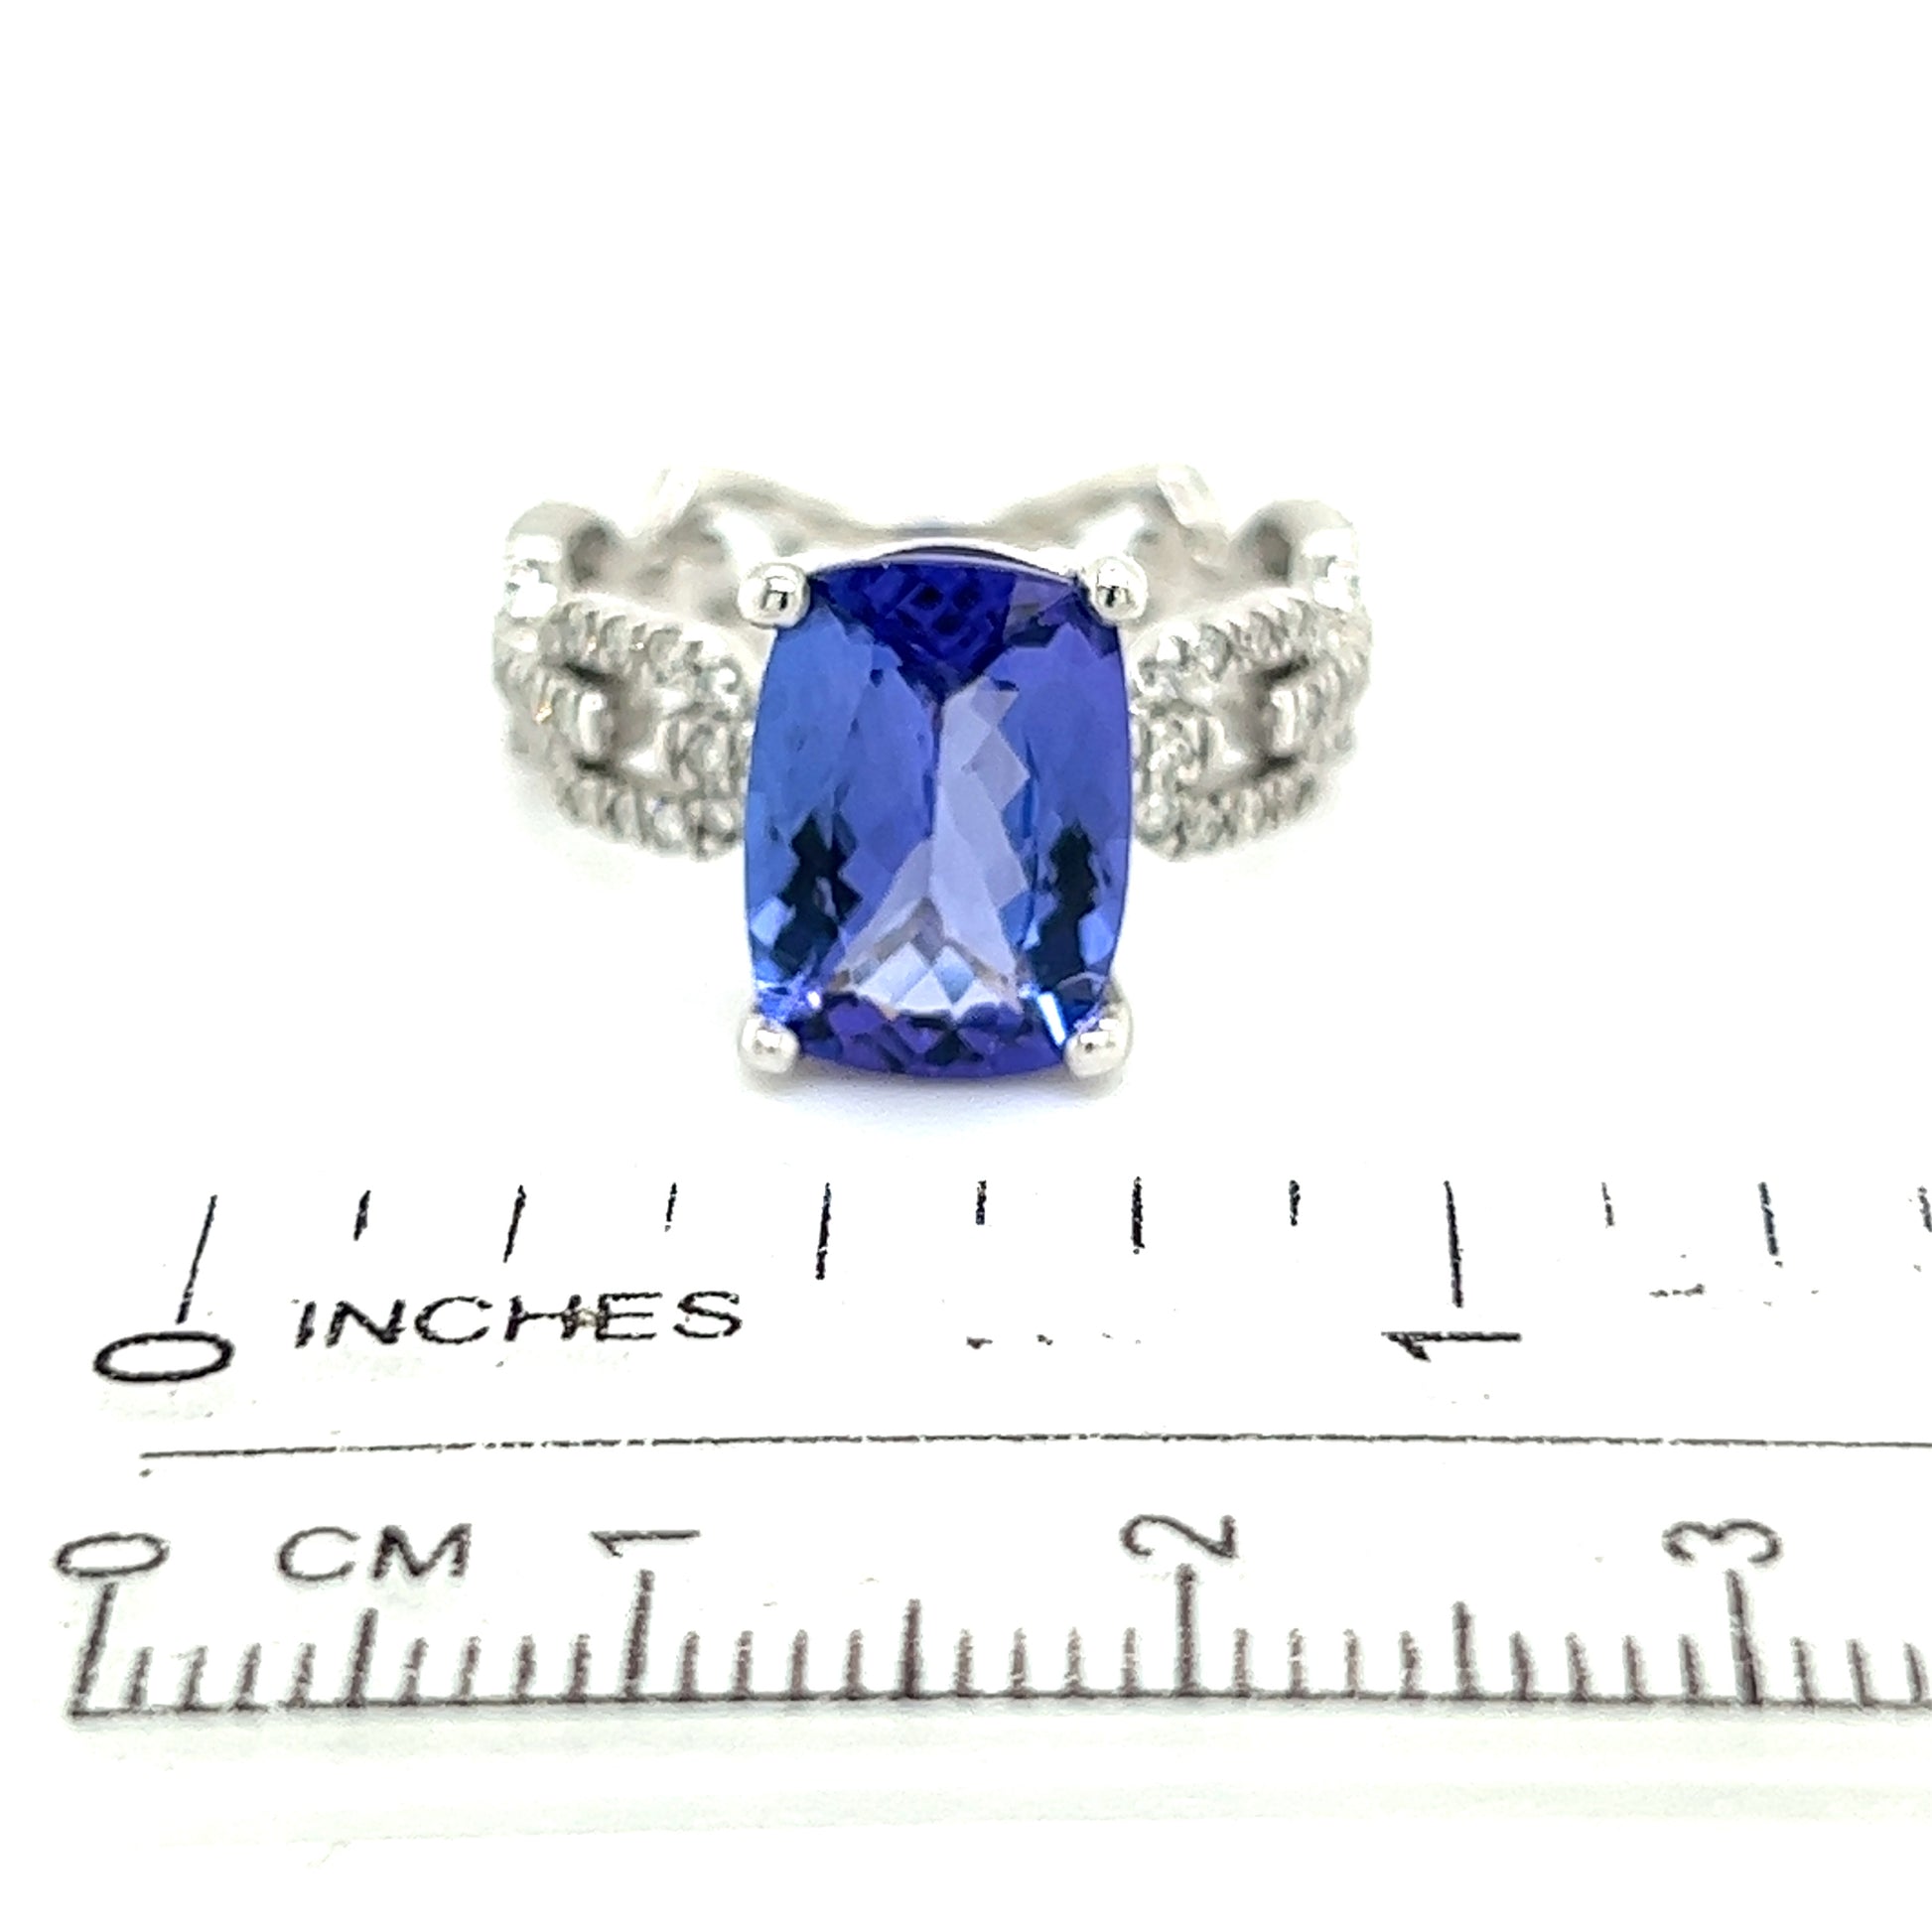 Natural Tanzanite Diamond Ring Size 6.5 14k White Gold 3.99 TCW Certified $5, 975 216192